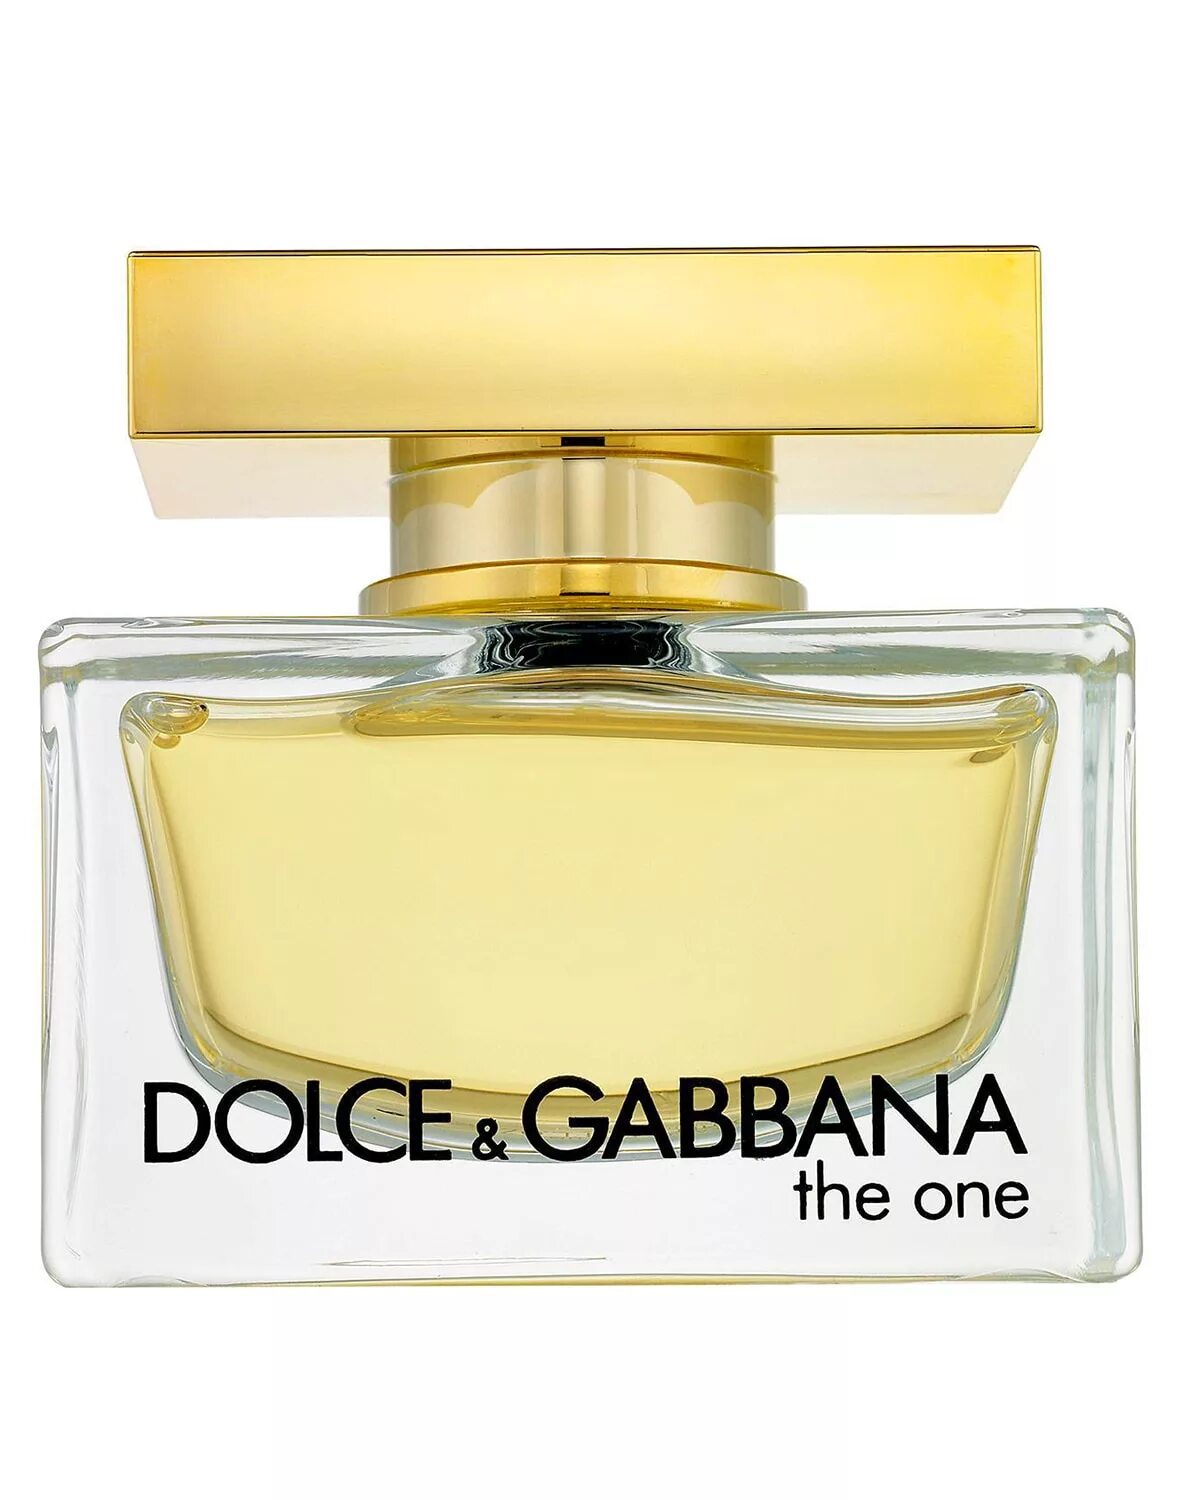 Купить дольче габбана ван. Духи лольче габано Зевар. Dolce & Gabbana the one women EDP, 75 ml. Dolce Gabbana the one 50ml. Dolce Gabbana the one 75 ml.